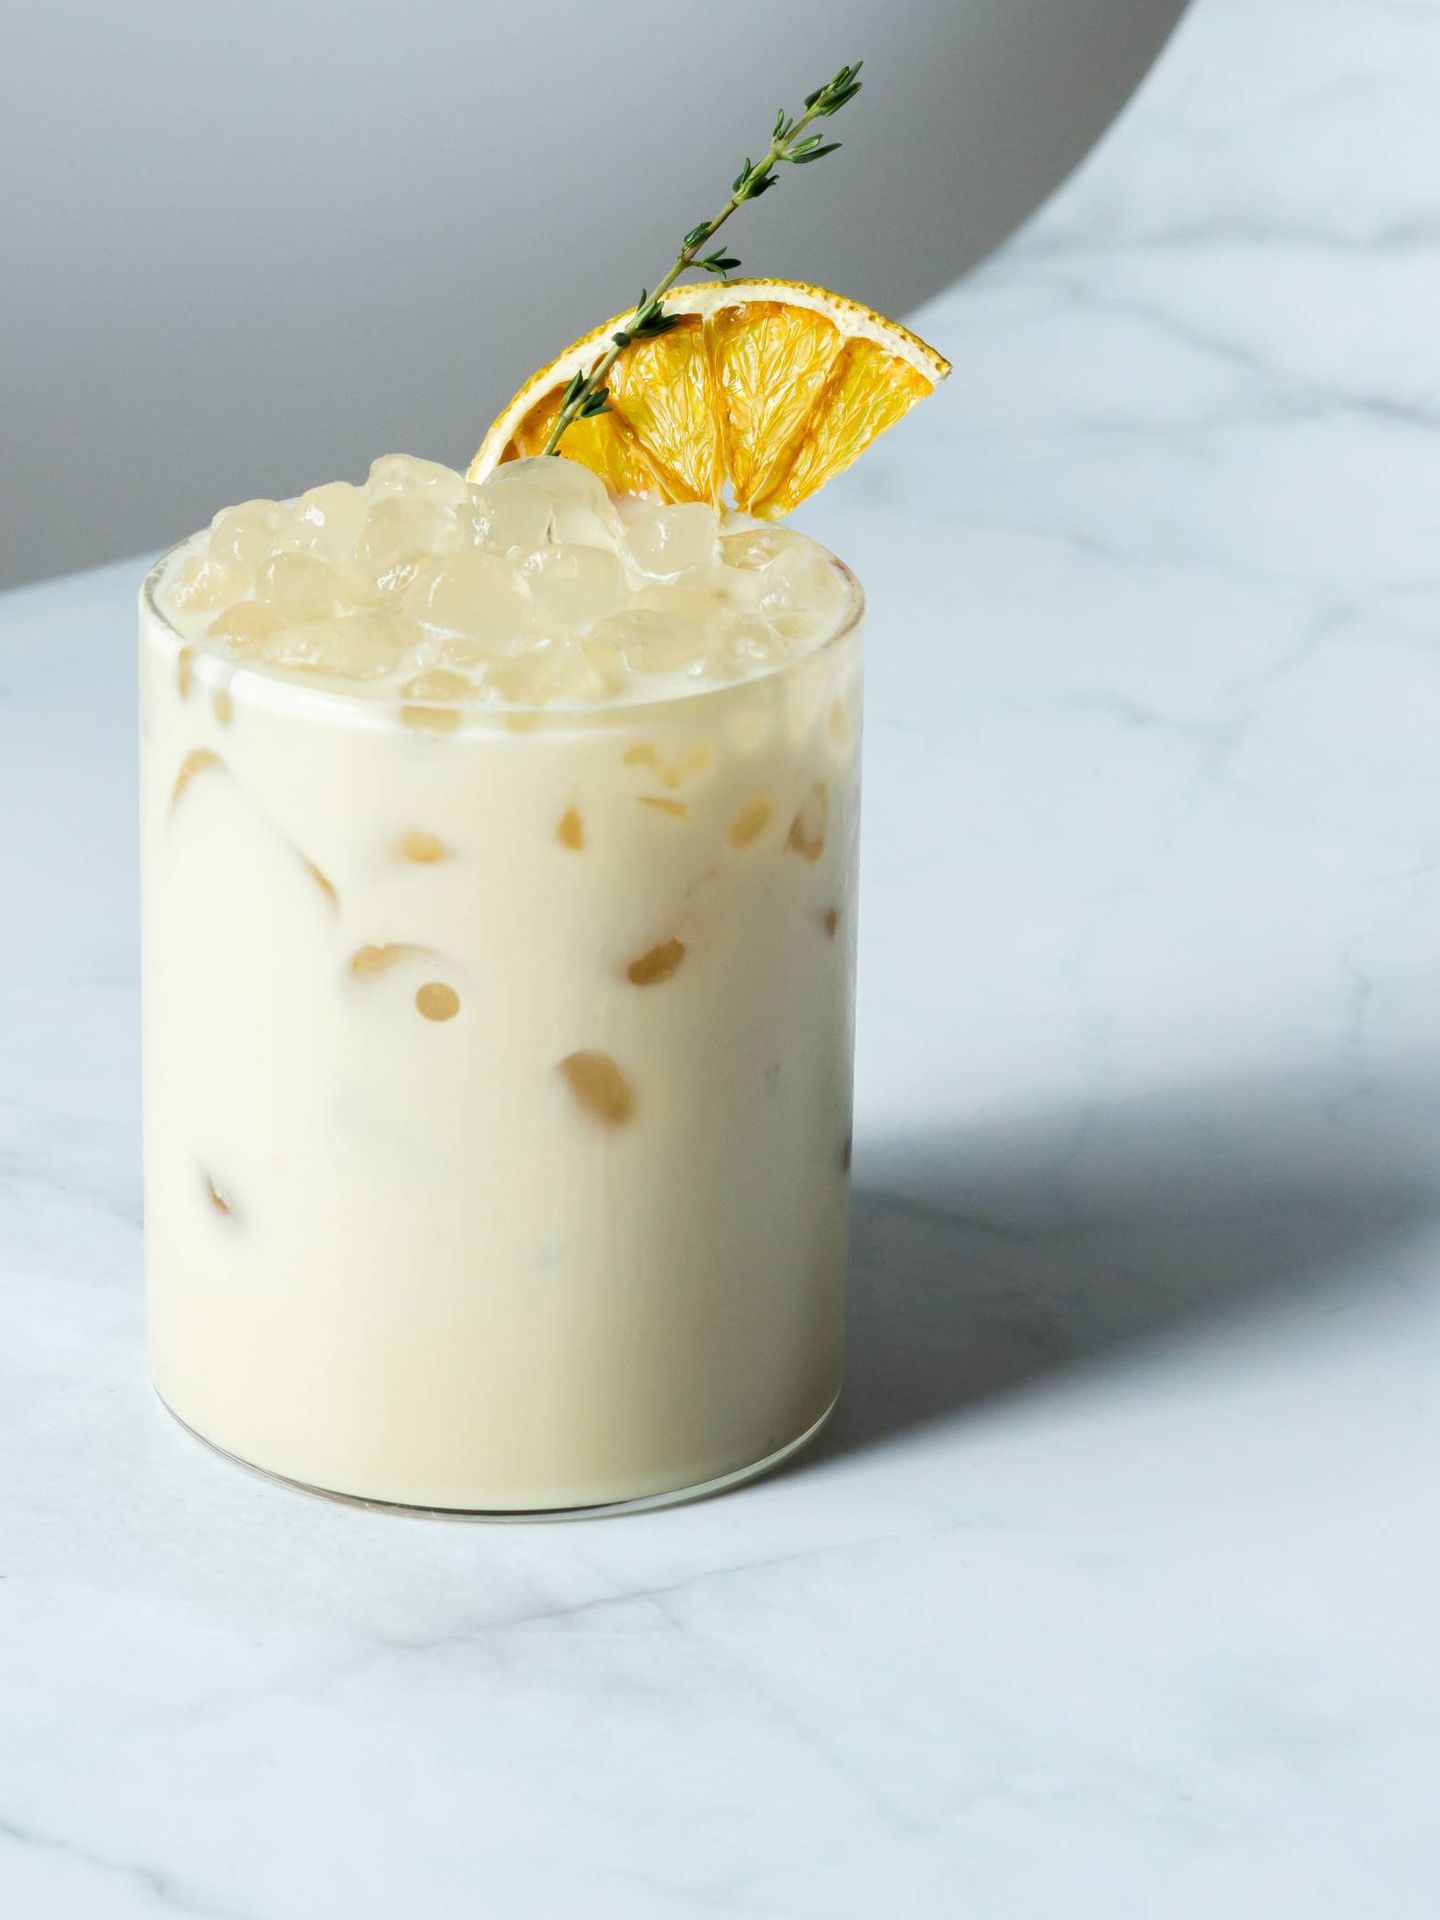 Golden Milk, la bebida antioxidante y antiinflamatoria. (Trình Minh Th? para Unsplash)